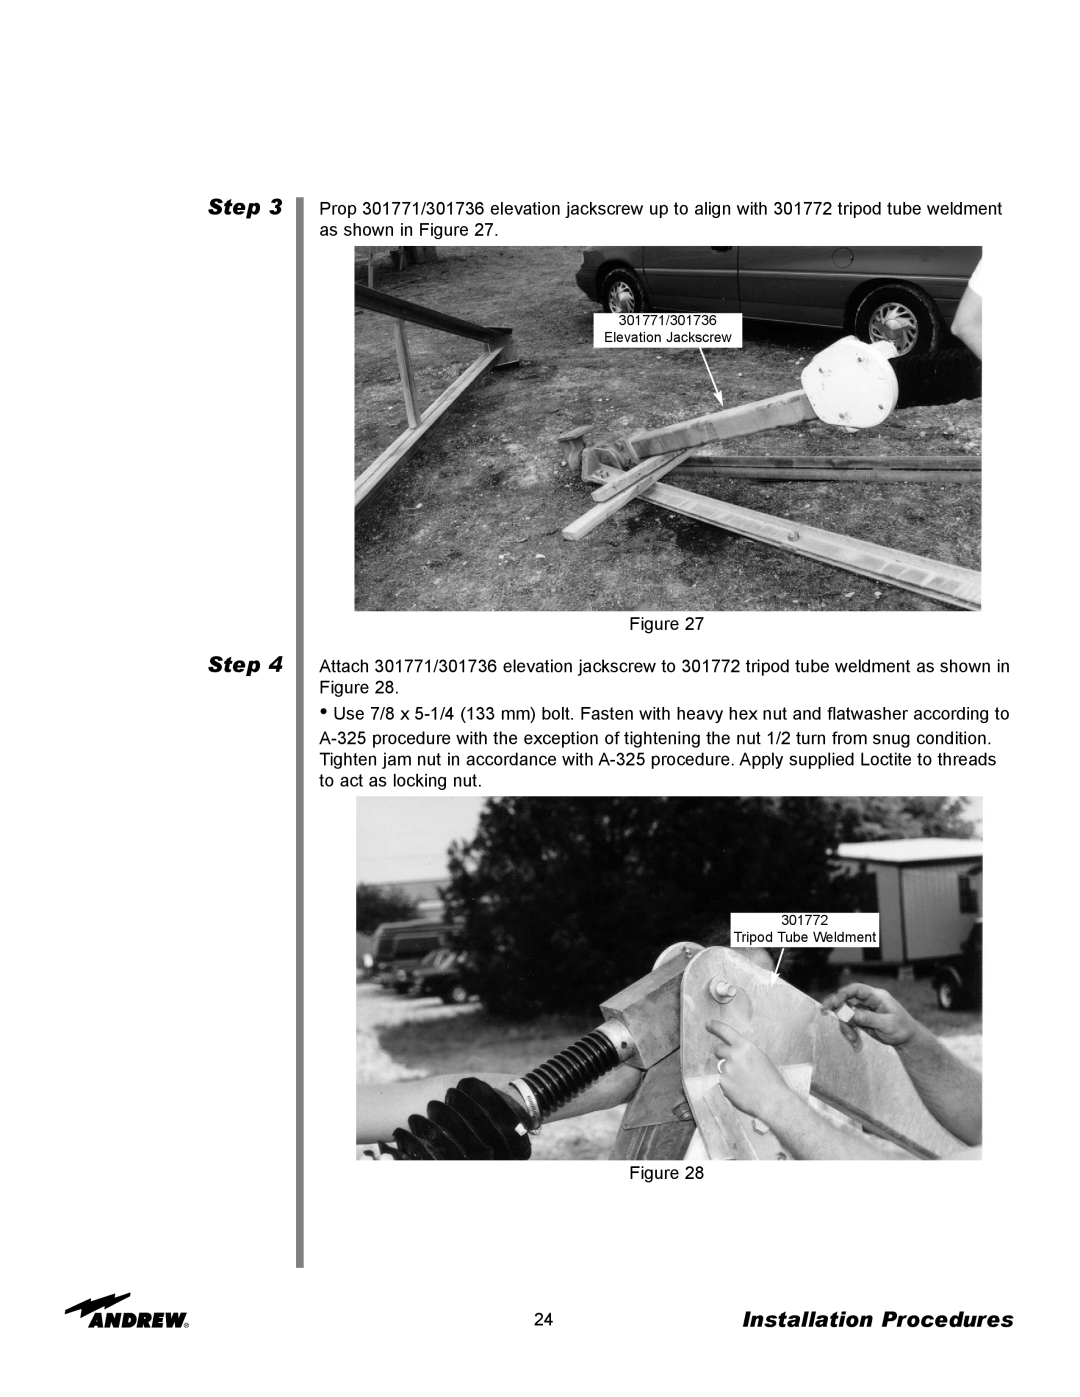 Andrew ES73 manual Step Step, Installation Procedures, Figure 